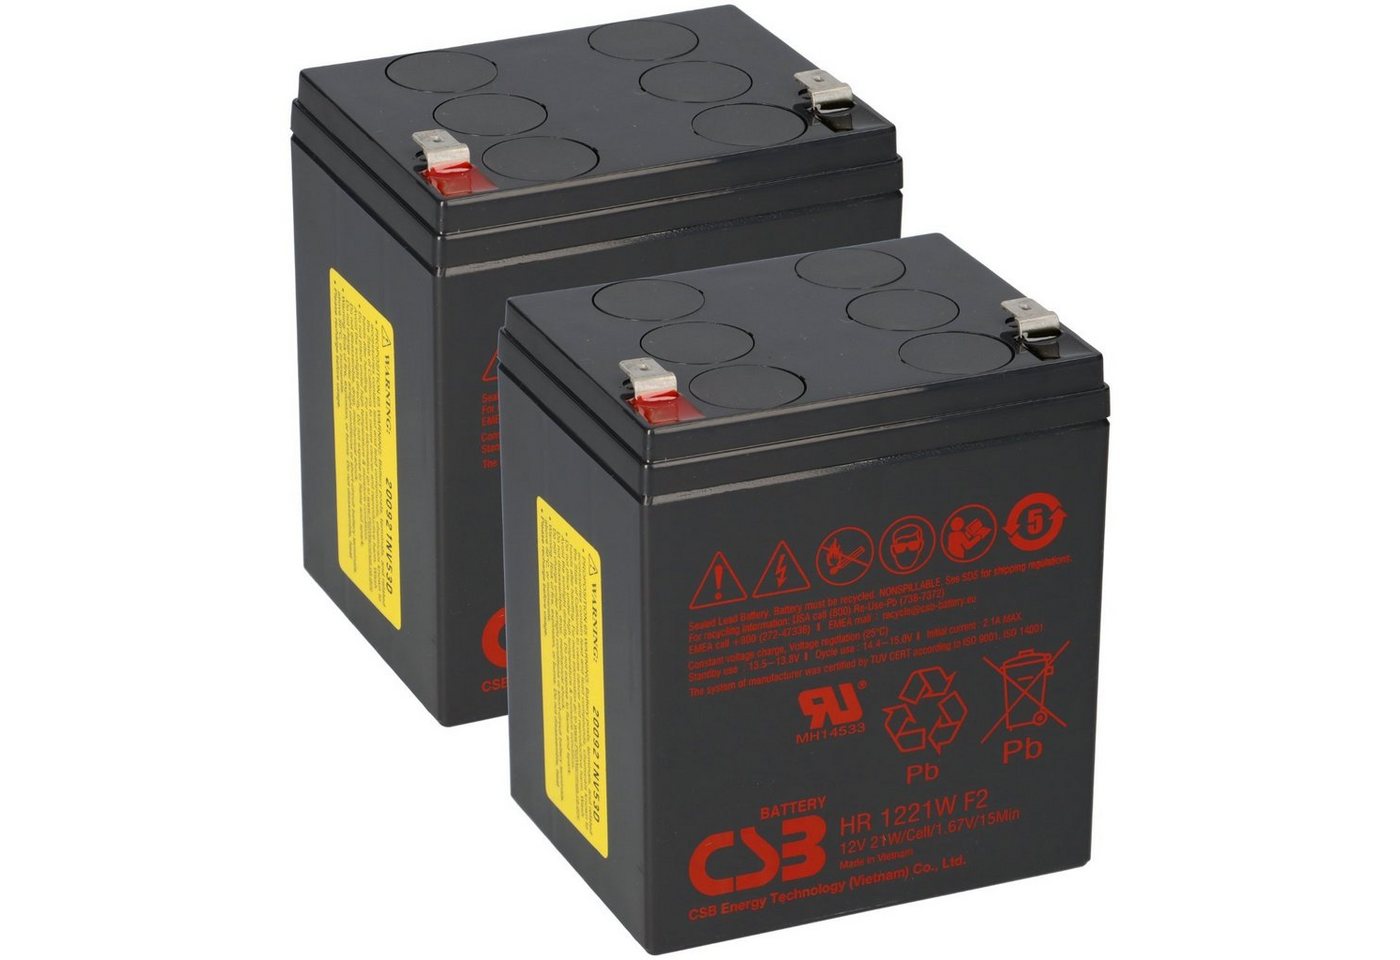 Akkuman USV Akkusatz kompatibel ZINTO B 400 AGM Blei Notstrom Batterie Akku von Akkuman